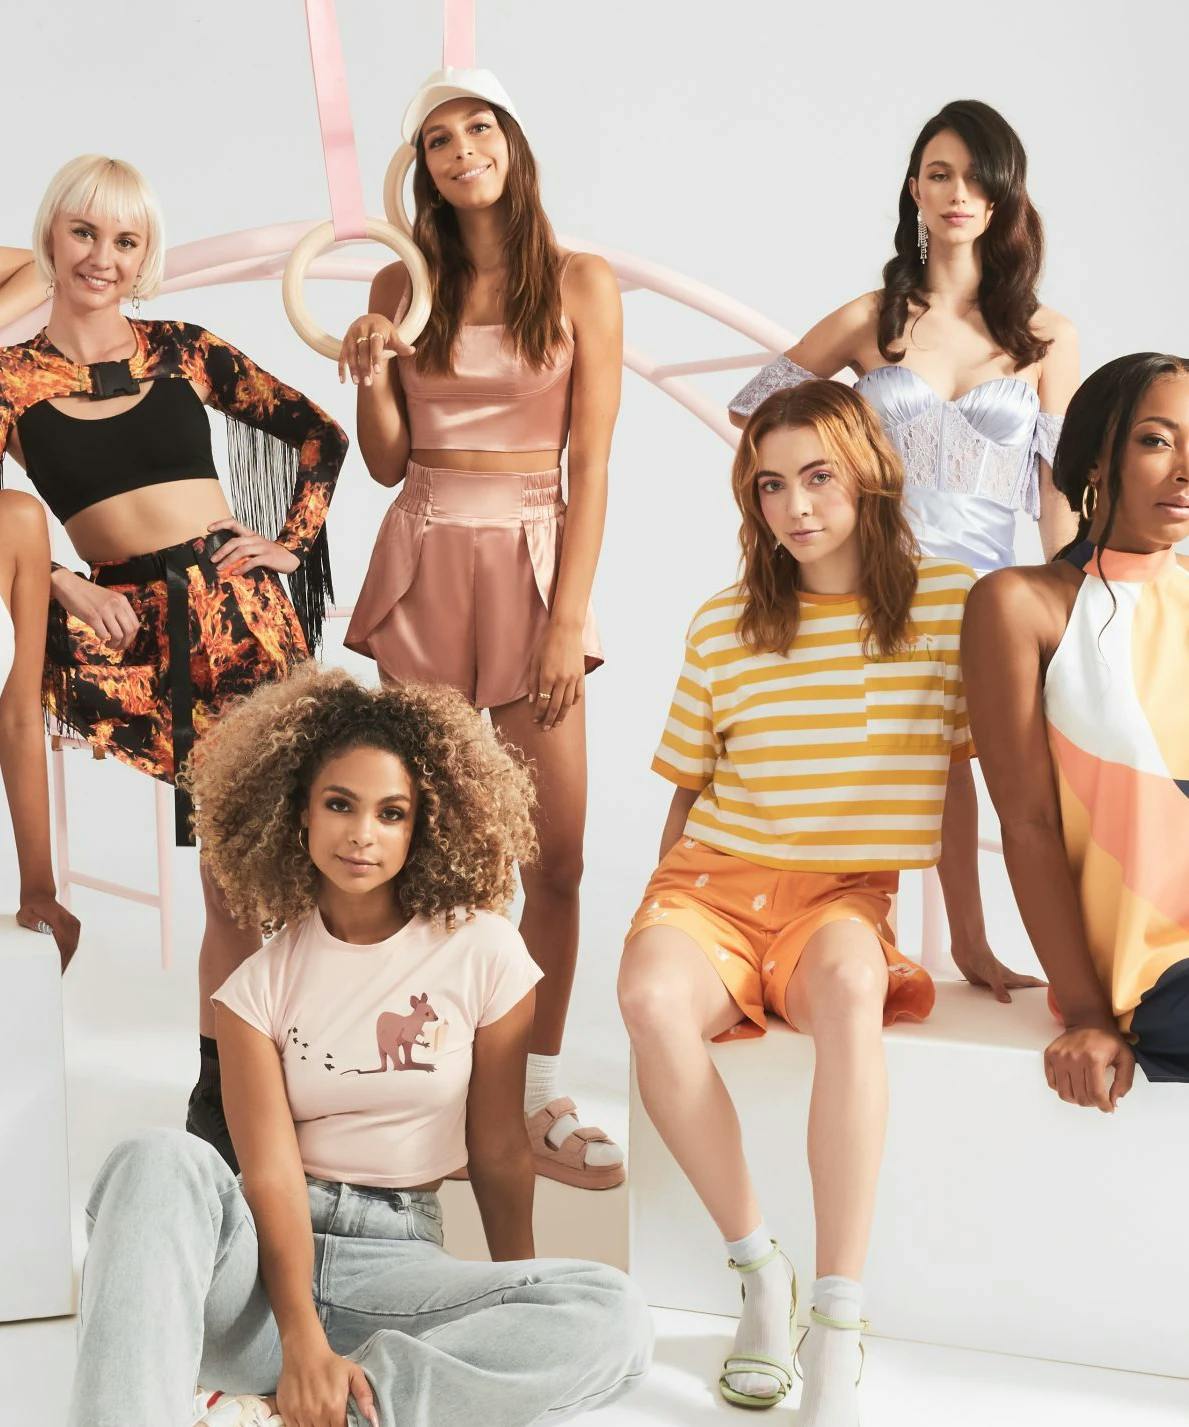 Fast Fashion Brand Shein Is A Scam With Sweatshops